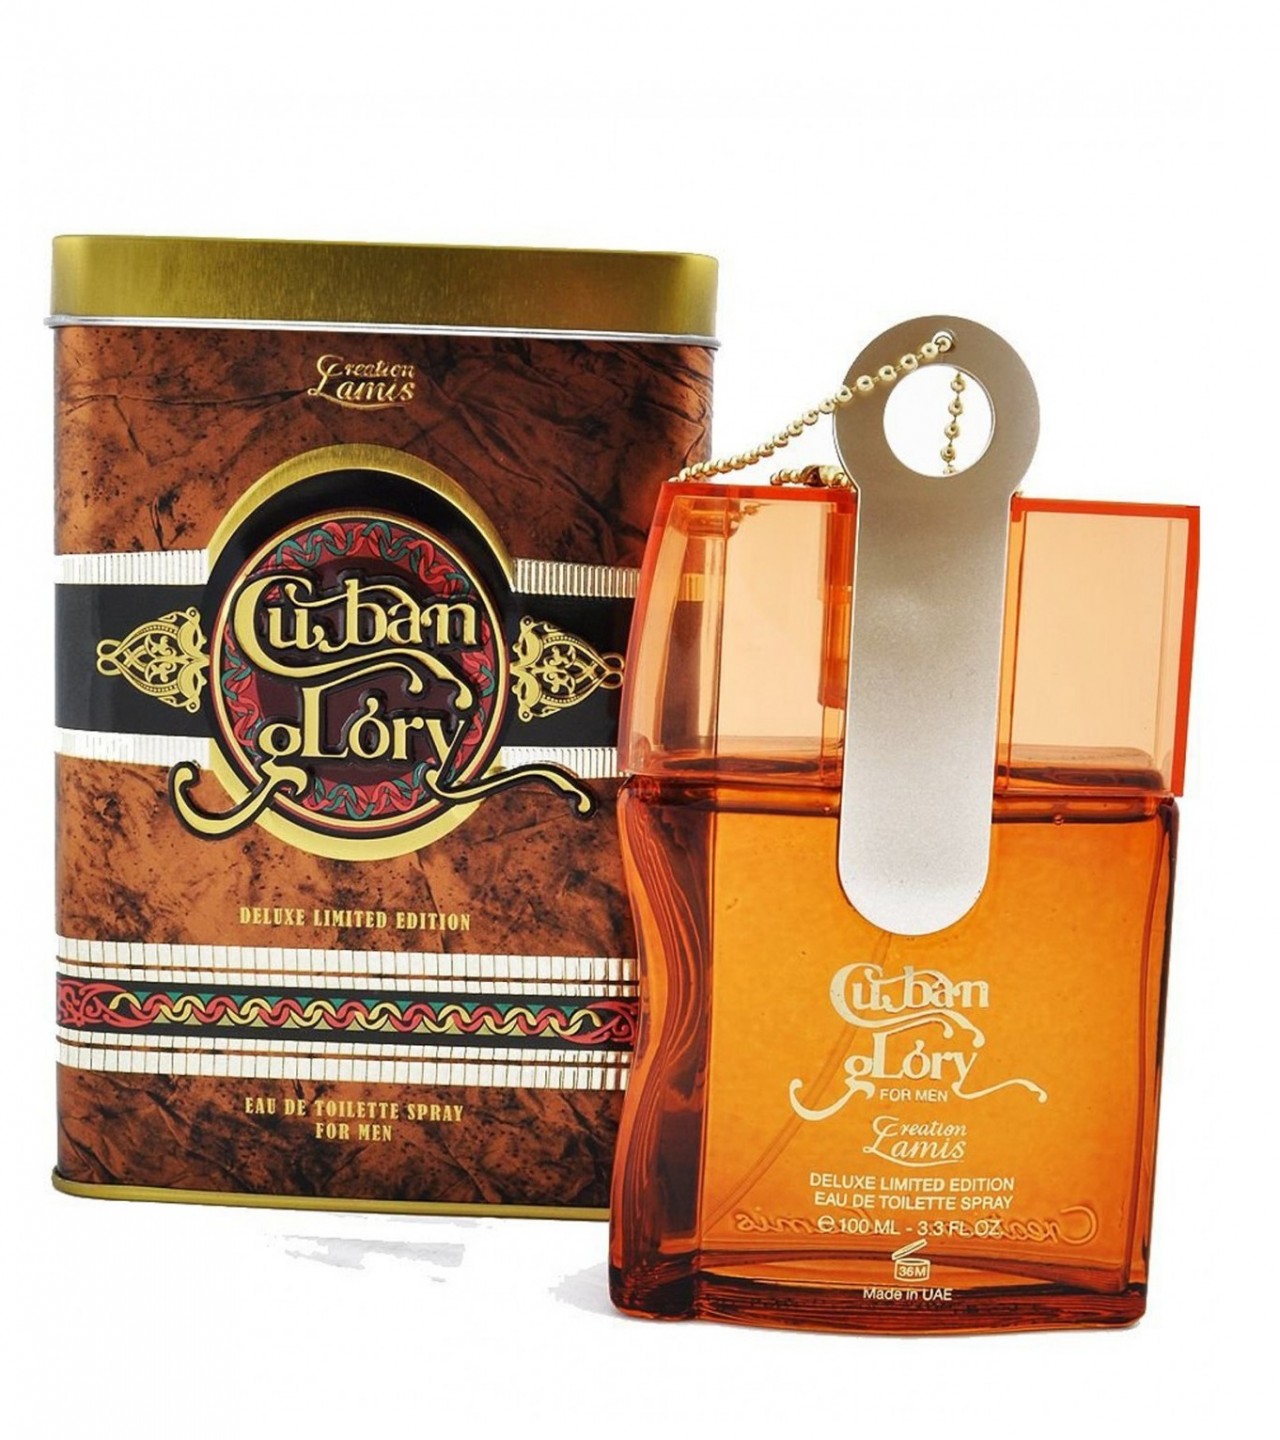 Creation Lamis Cuban Glory Perfume For Men – EDT – 100 ml